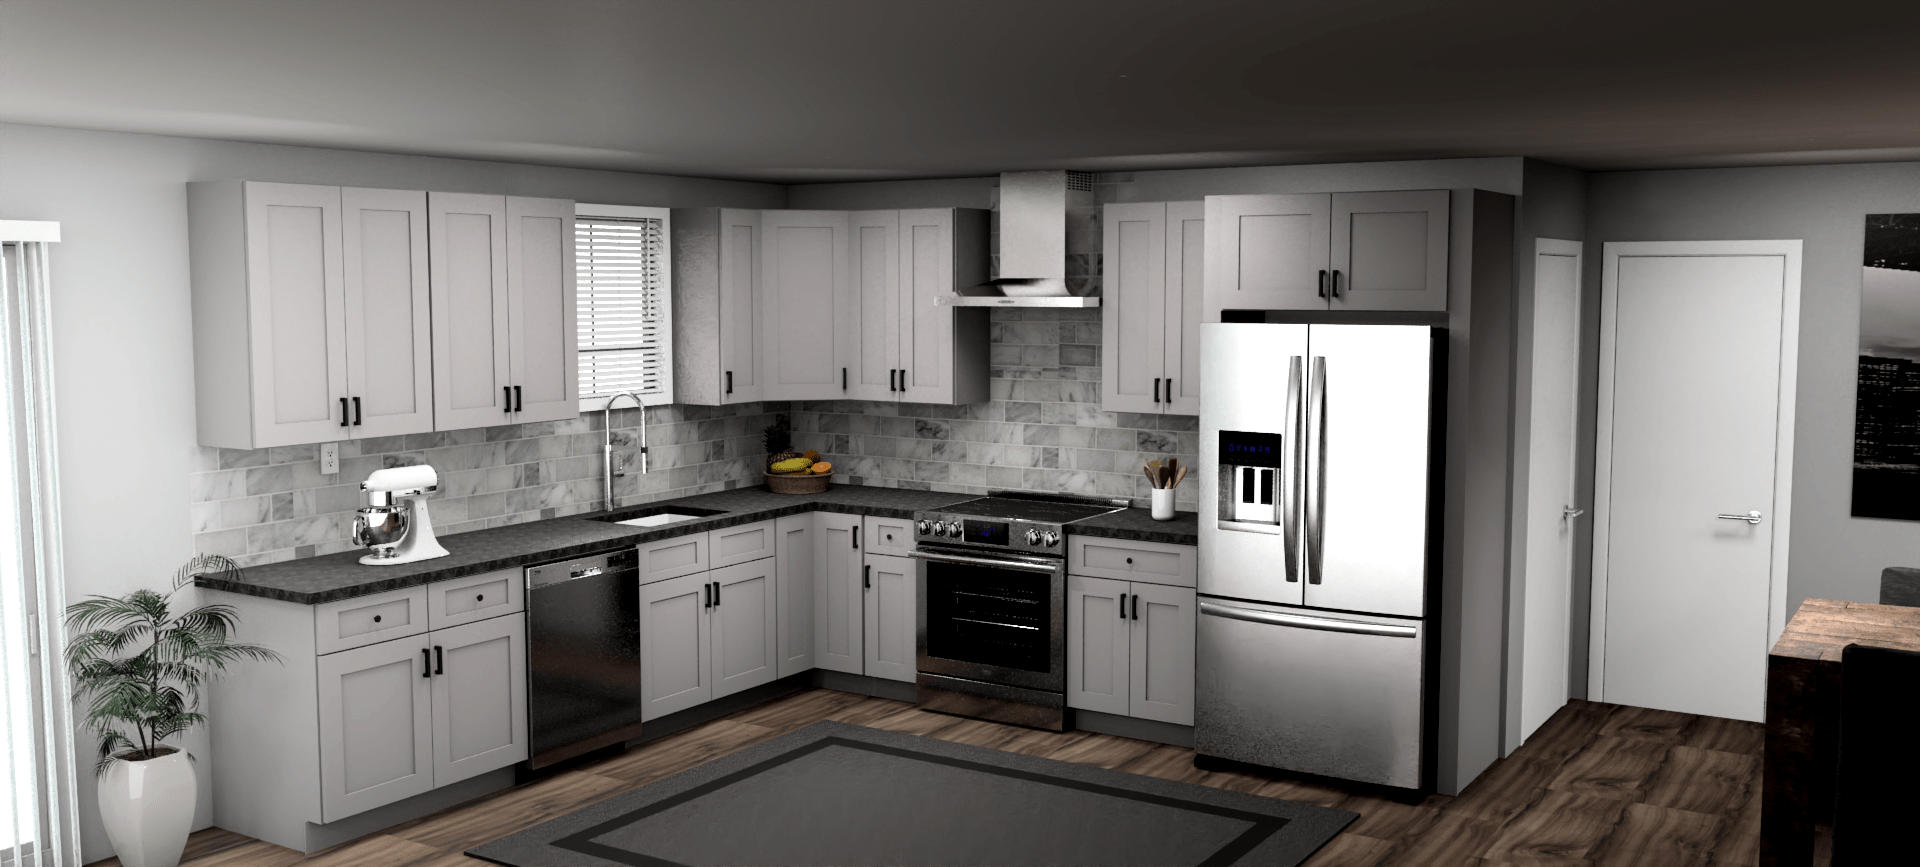 Fabuwood Allure Galaxy Nickel 11 x 12 L Shaped Kitchen Main Layout Photo